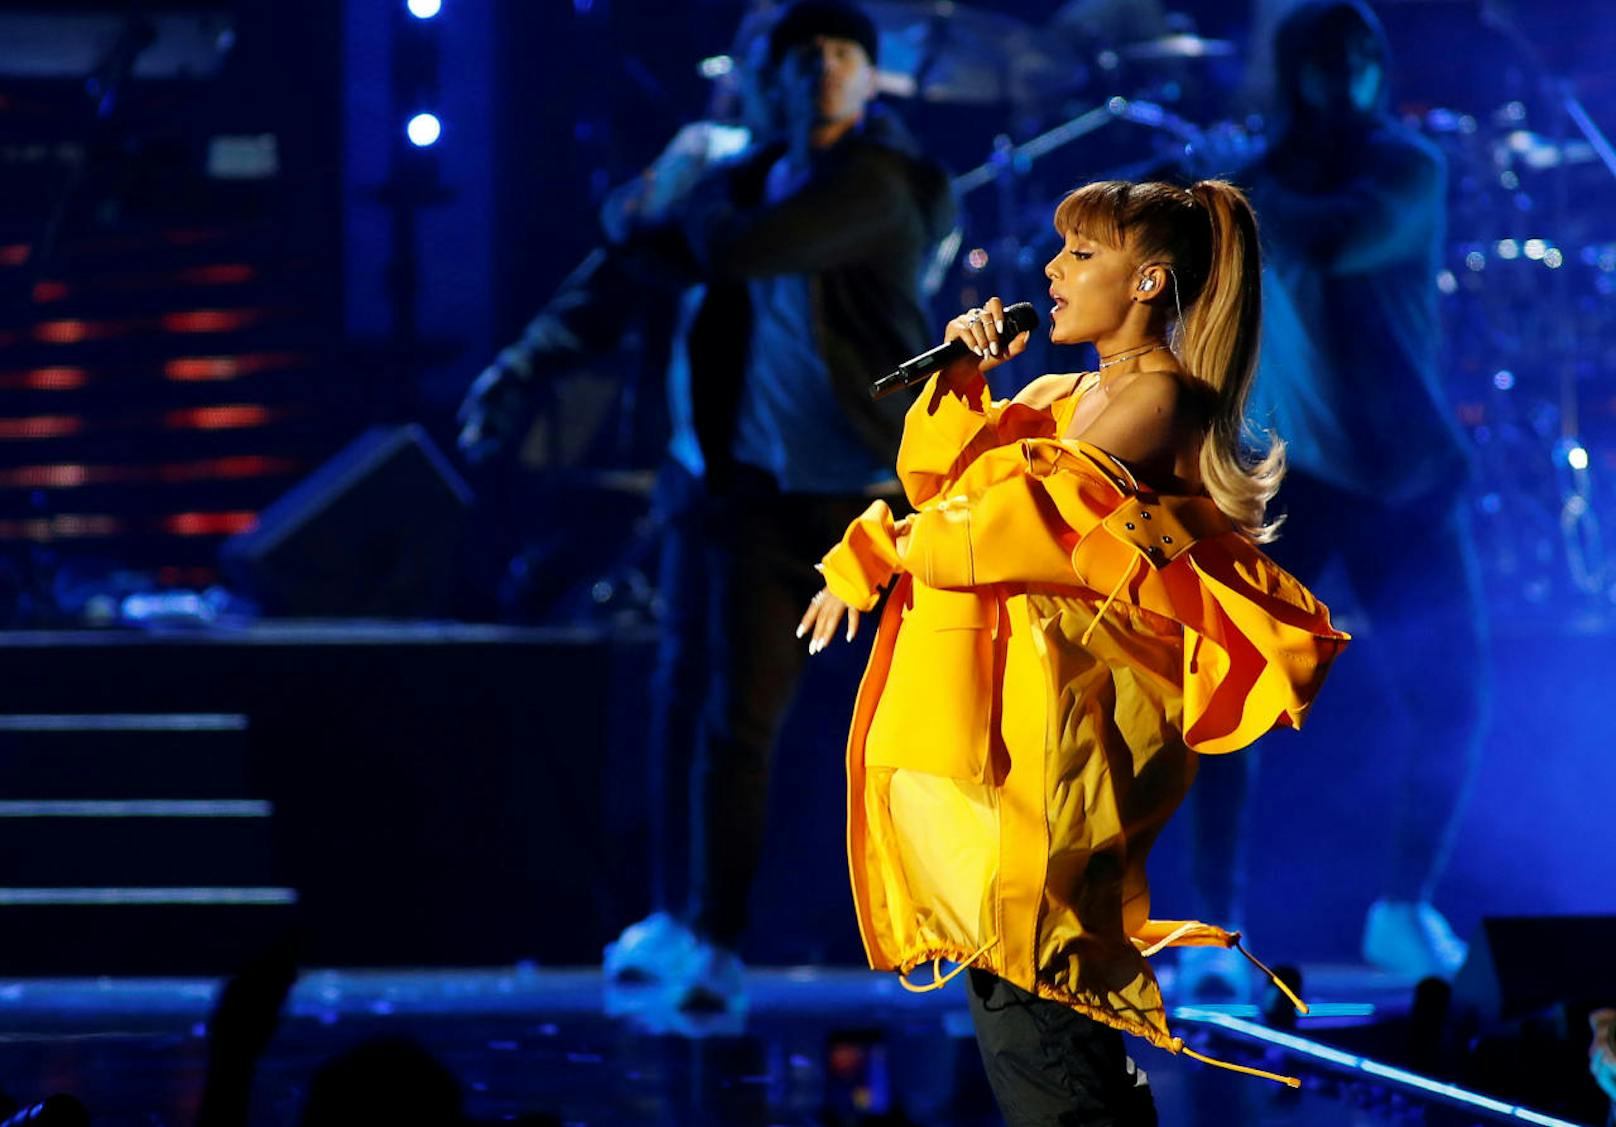 Ariana Grande singt beim iHeartRadio Music Festival in Las Vegas im September 2016.